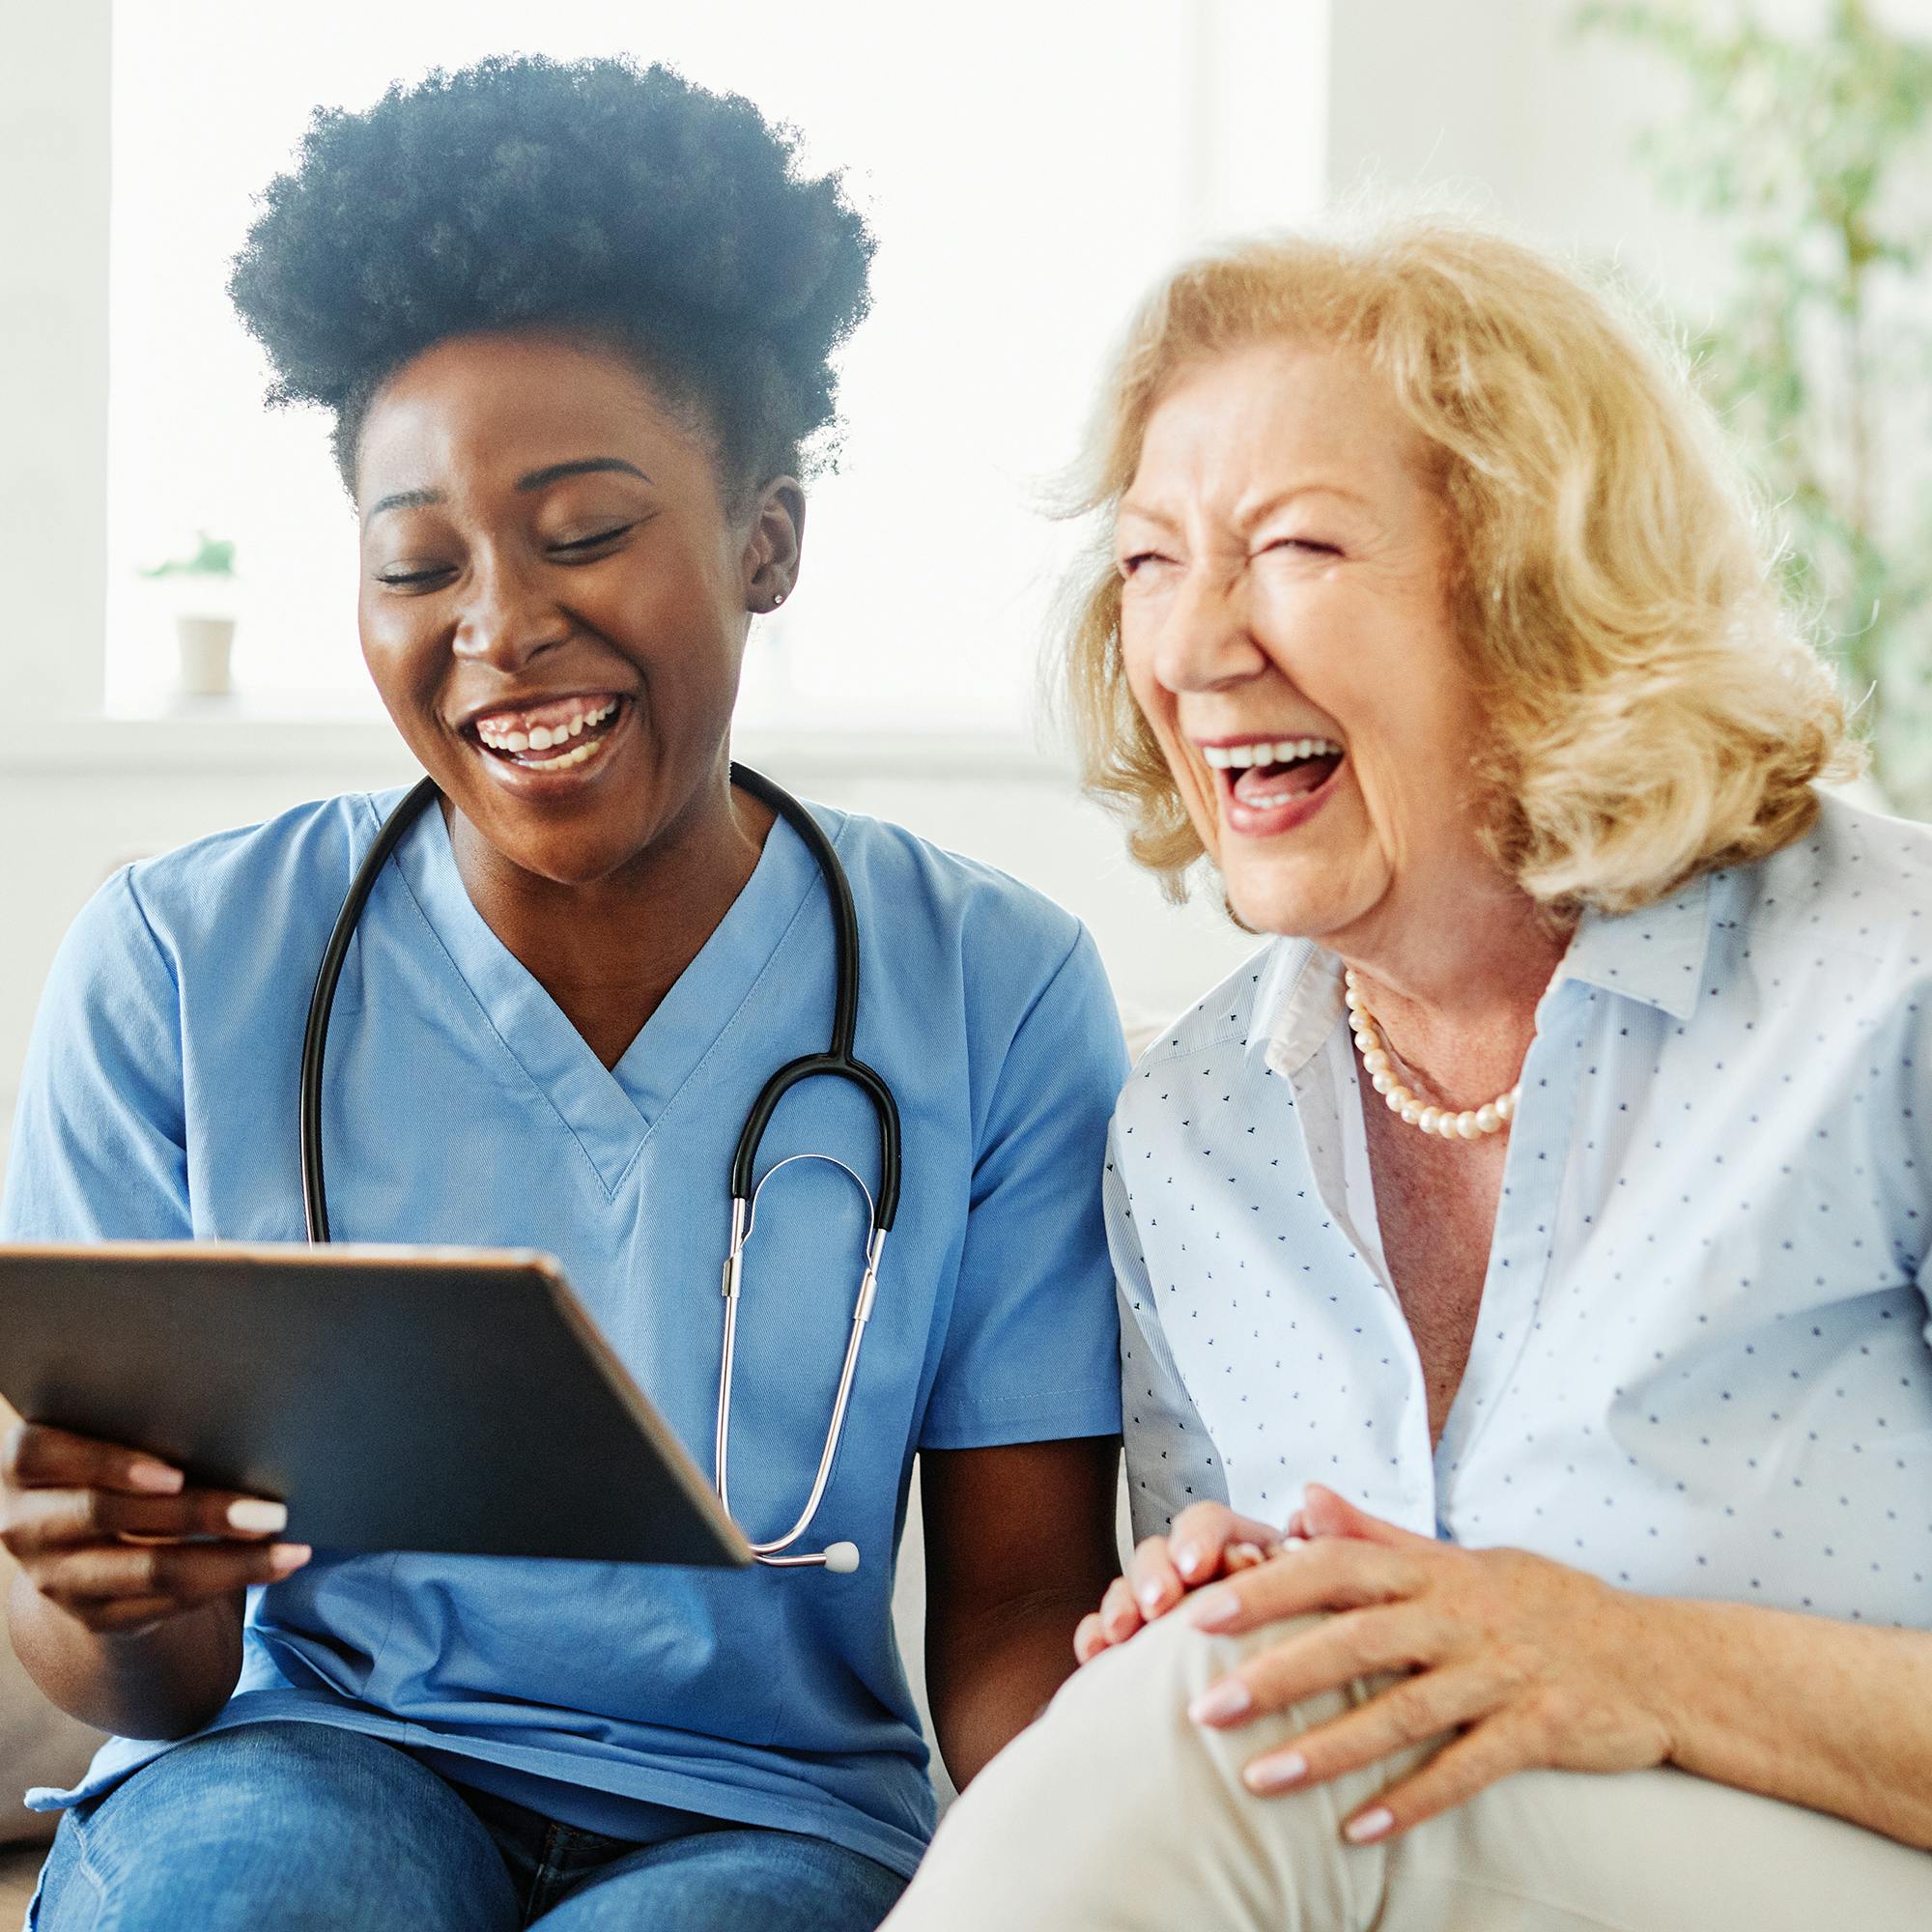 Elderly patient and nurse smiling together